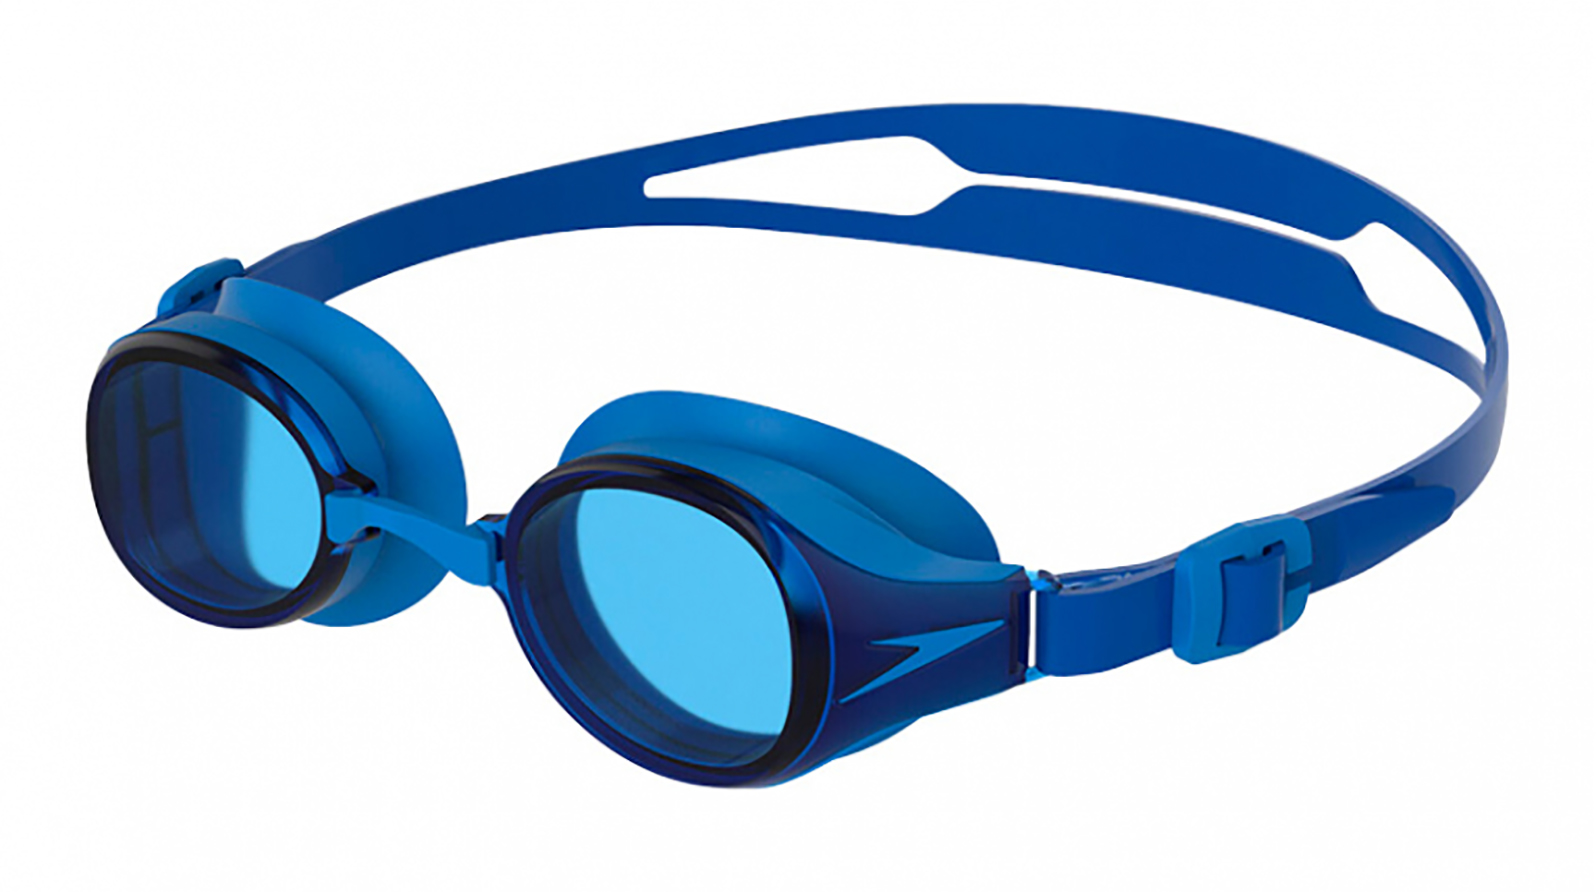 Speedo Очки для плавания Hydropure Optical F809 -4.0